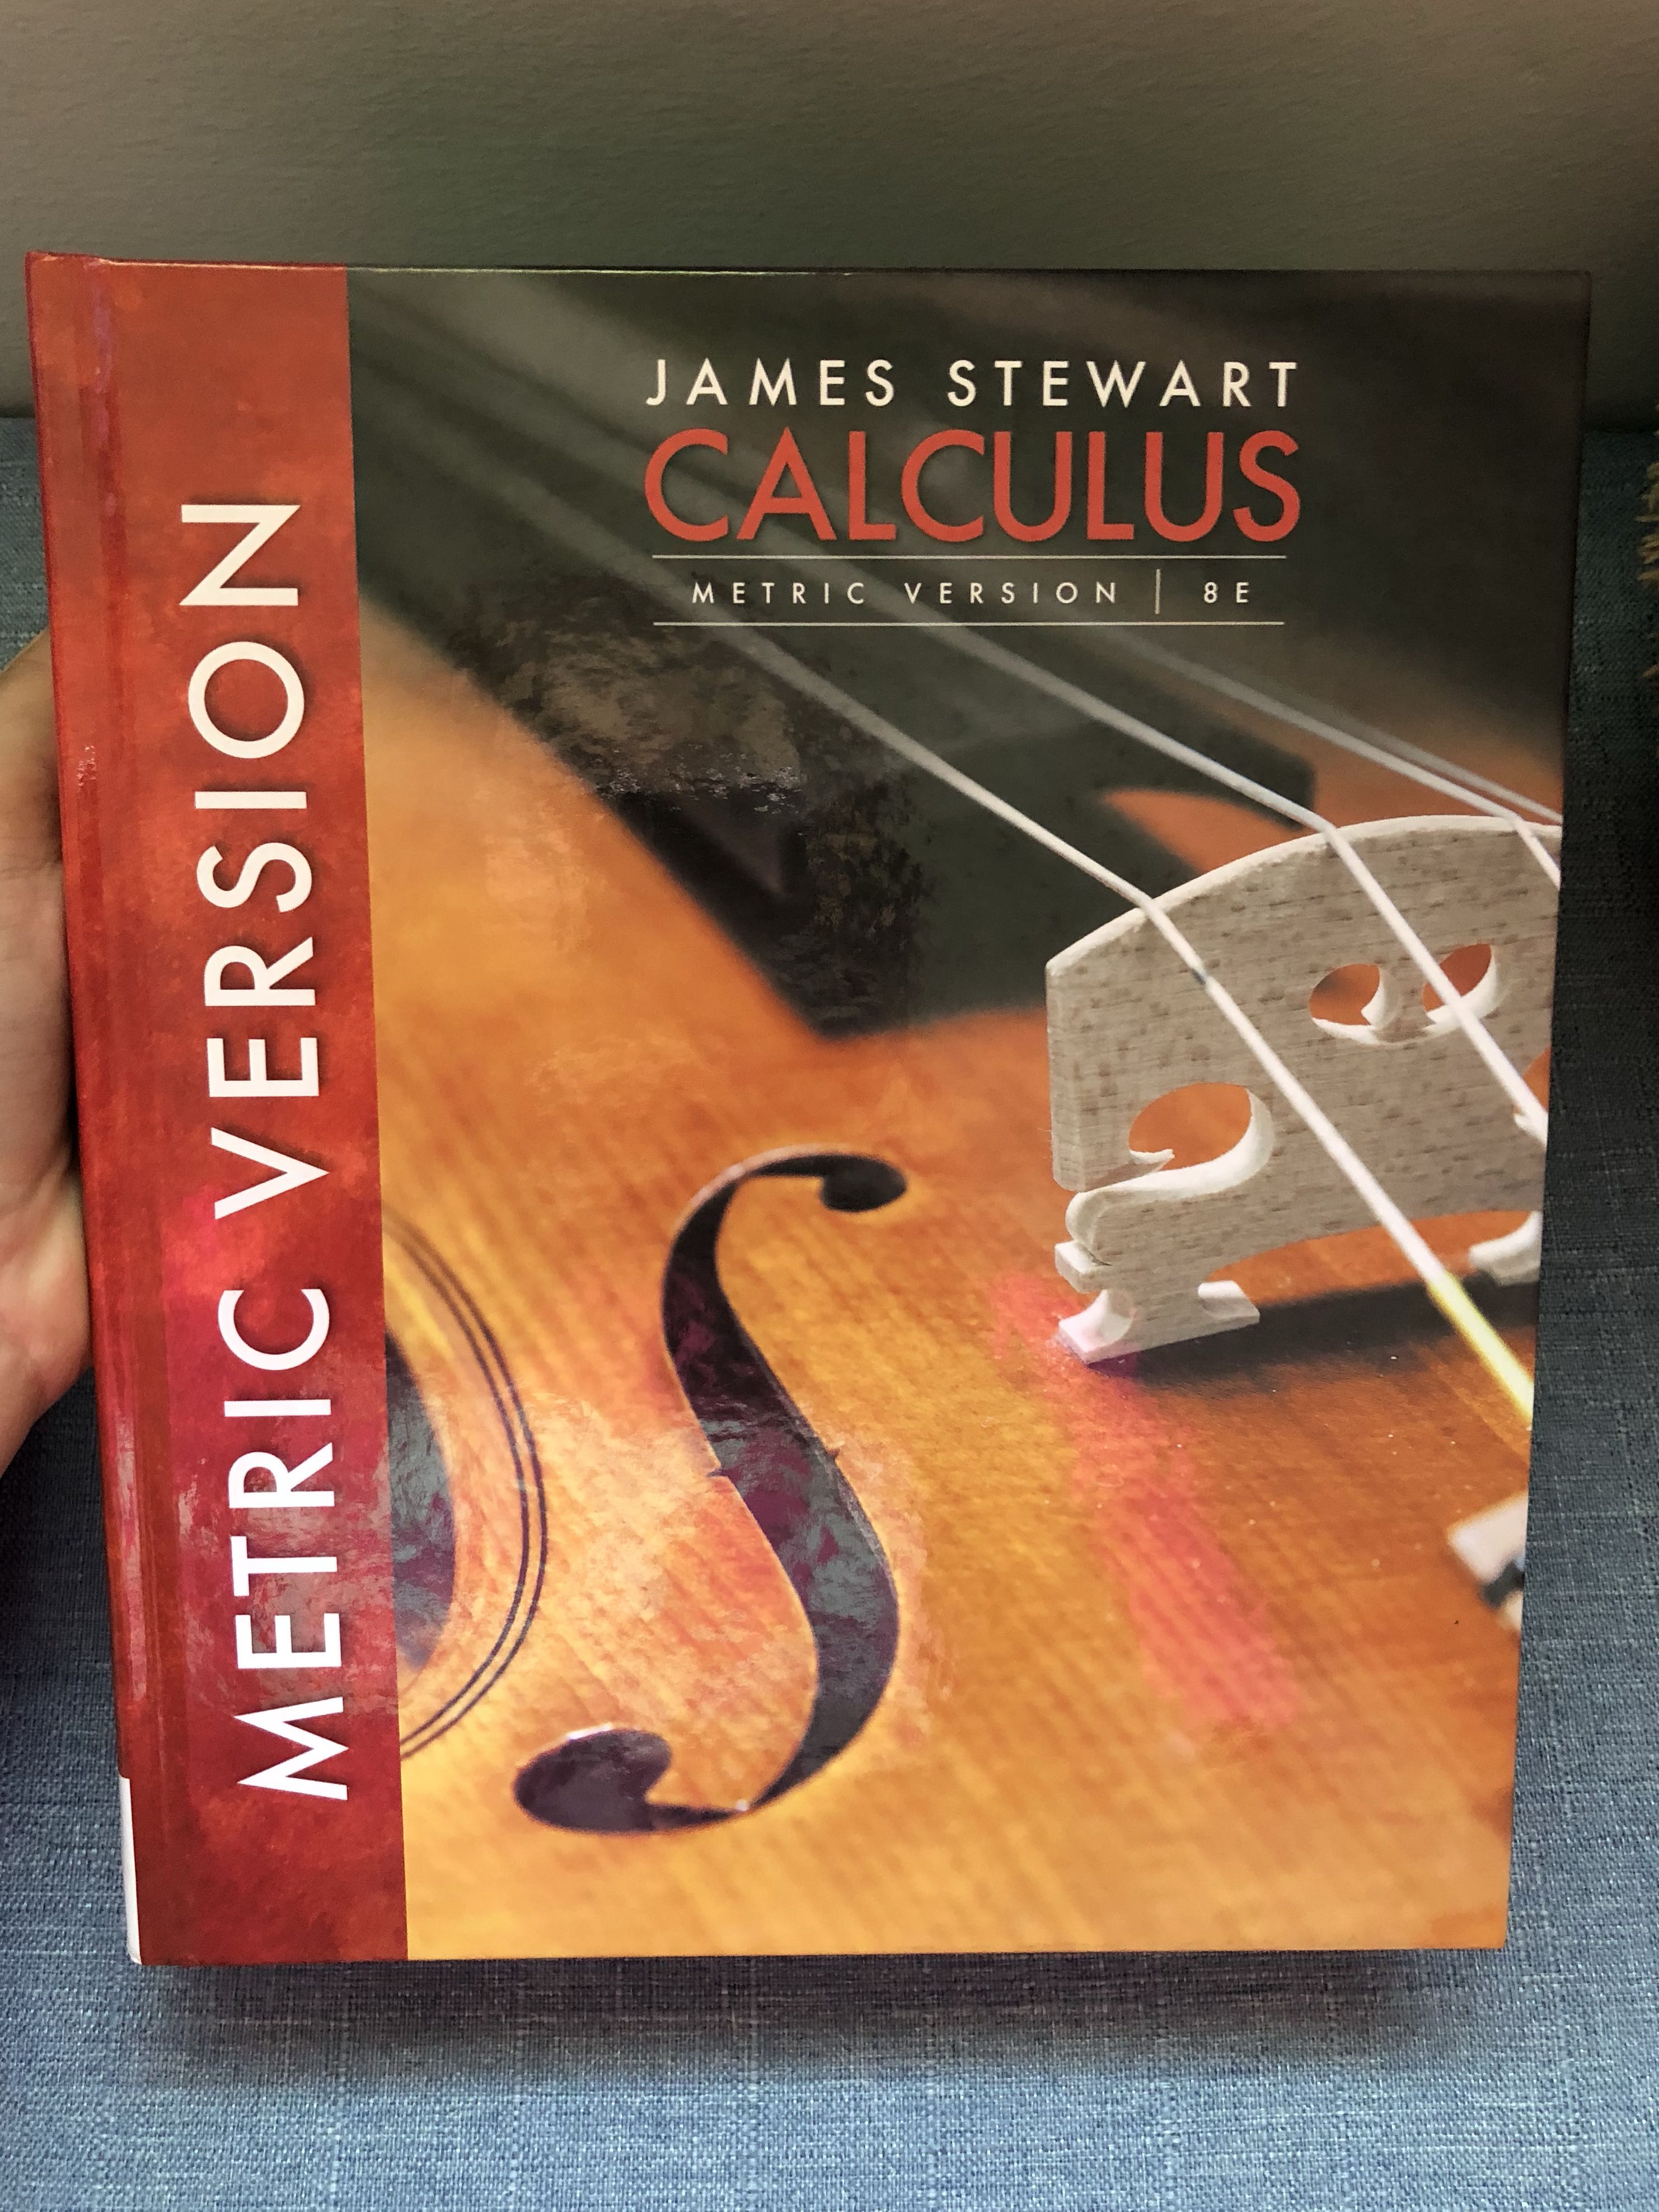 ⚡ Stewart calculus 8th edition. Calculus 8th Edition by James Stewart